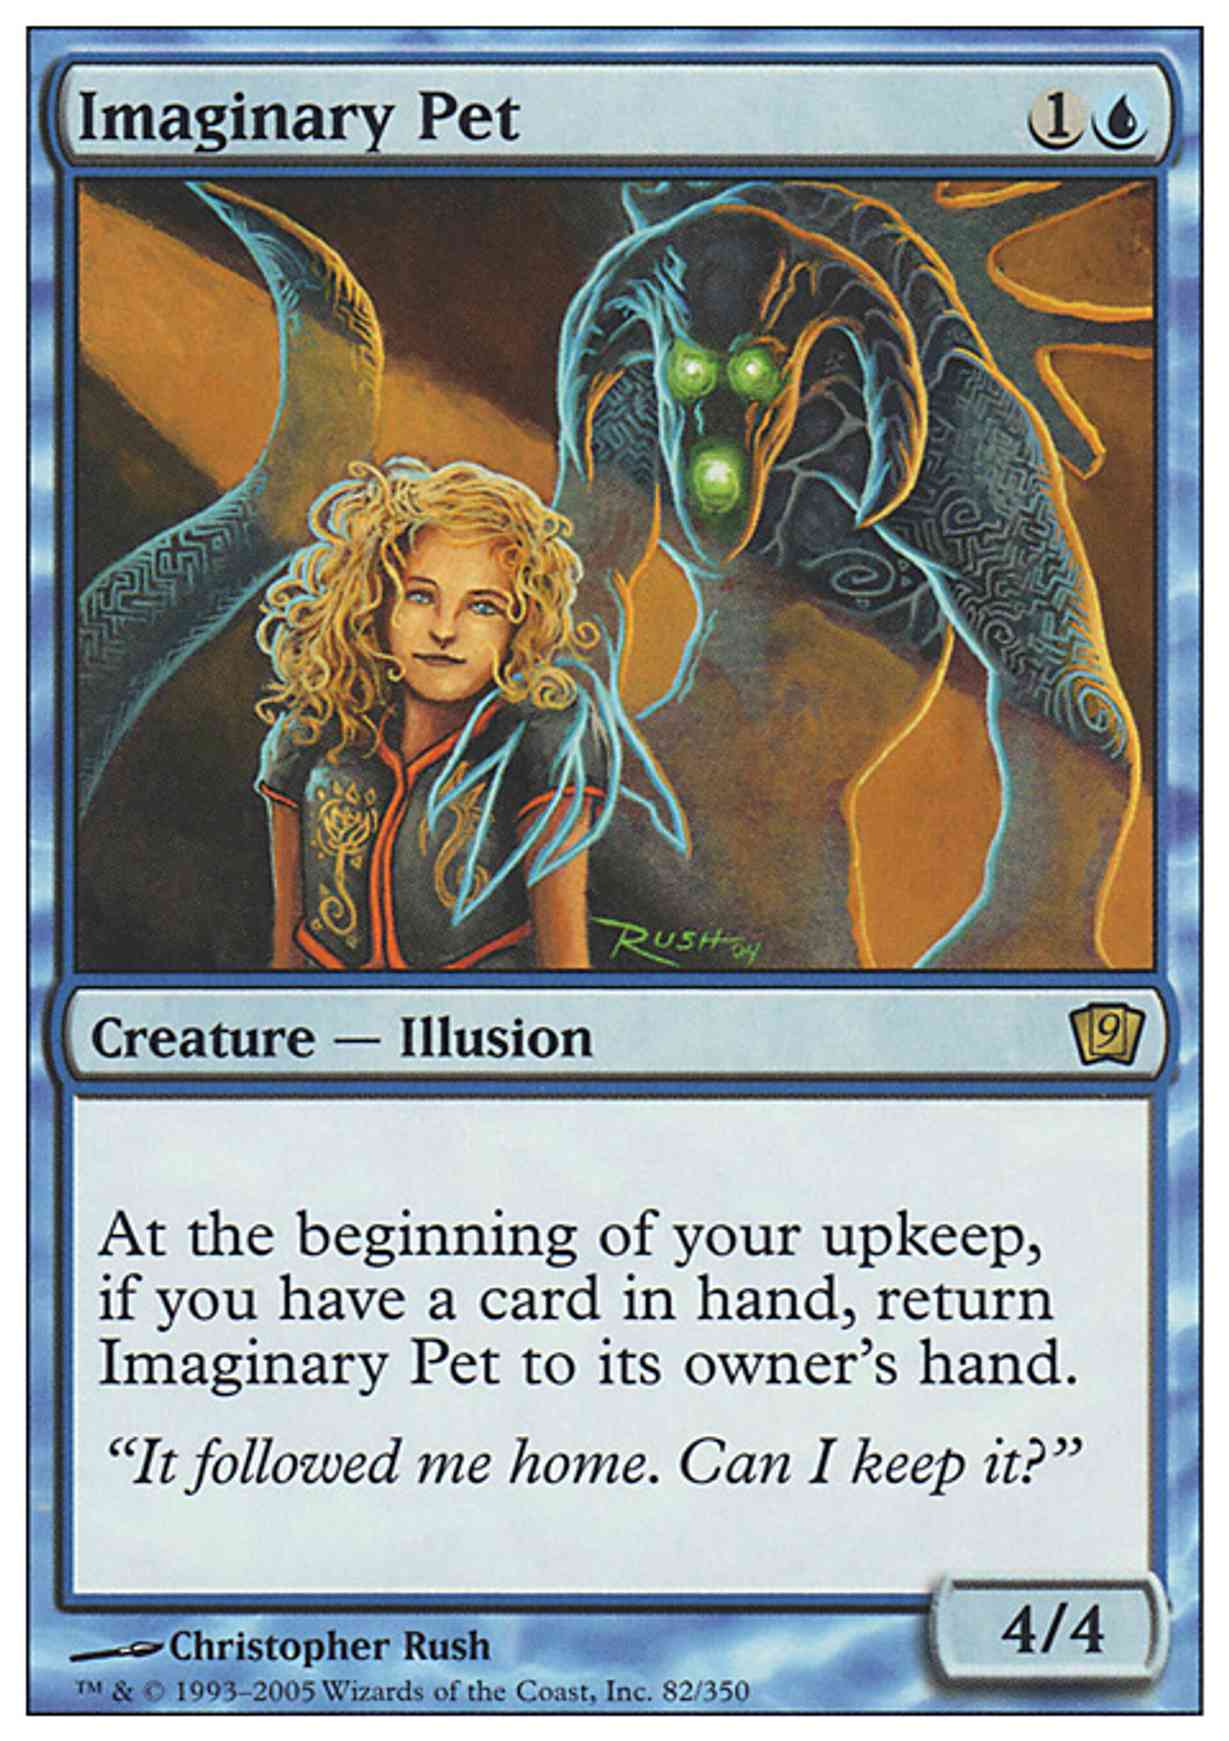 Imaginary Pet magic card front